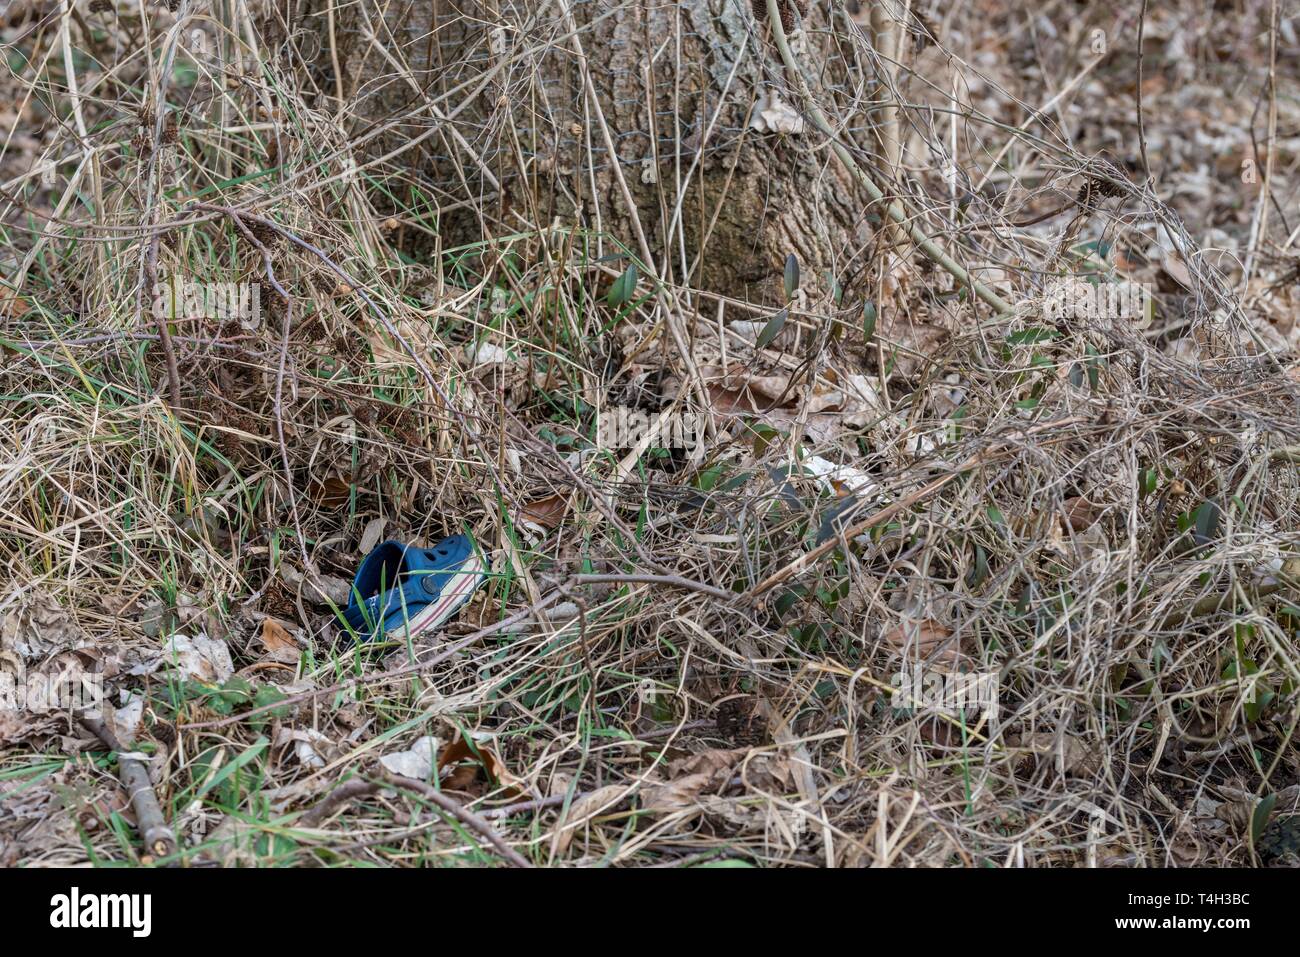 Single blue children sandal thrown away in high grass, Germany Stock Photo